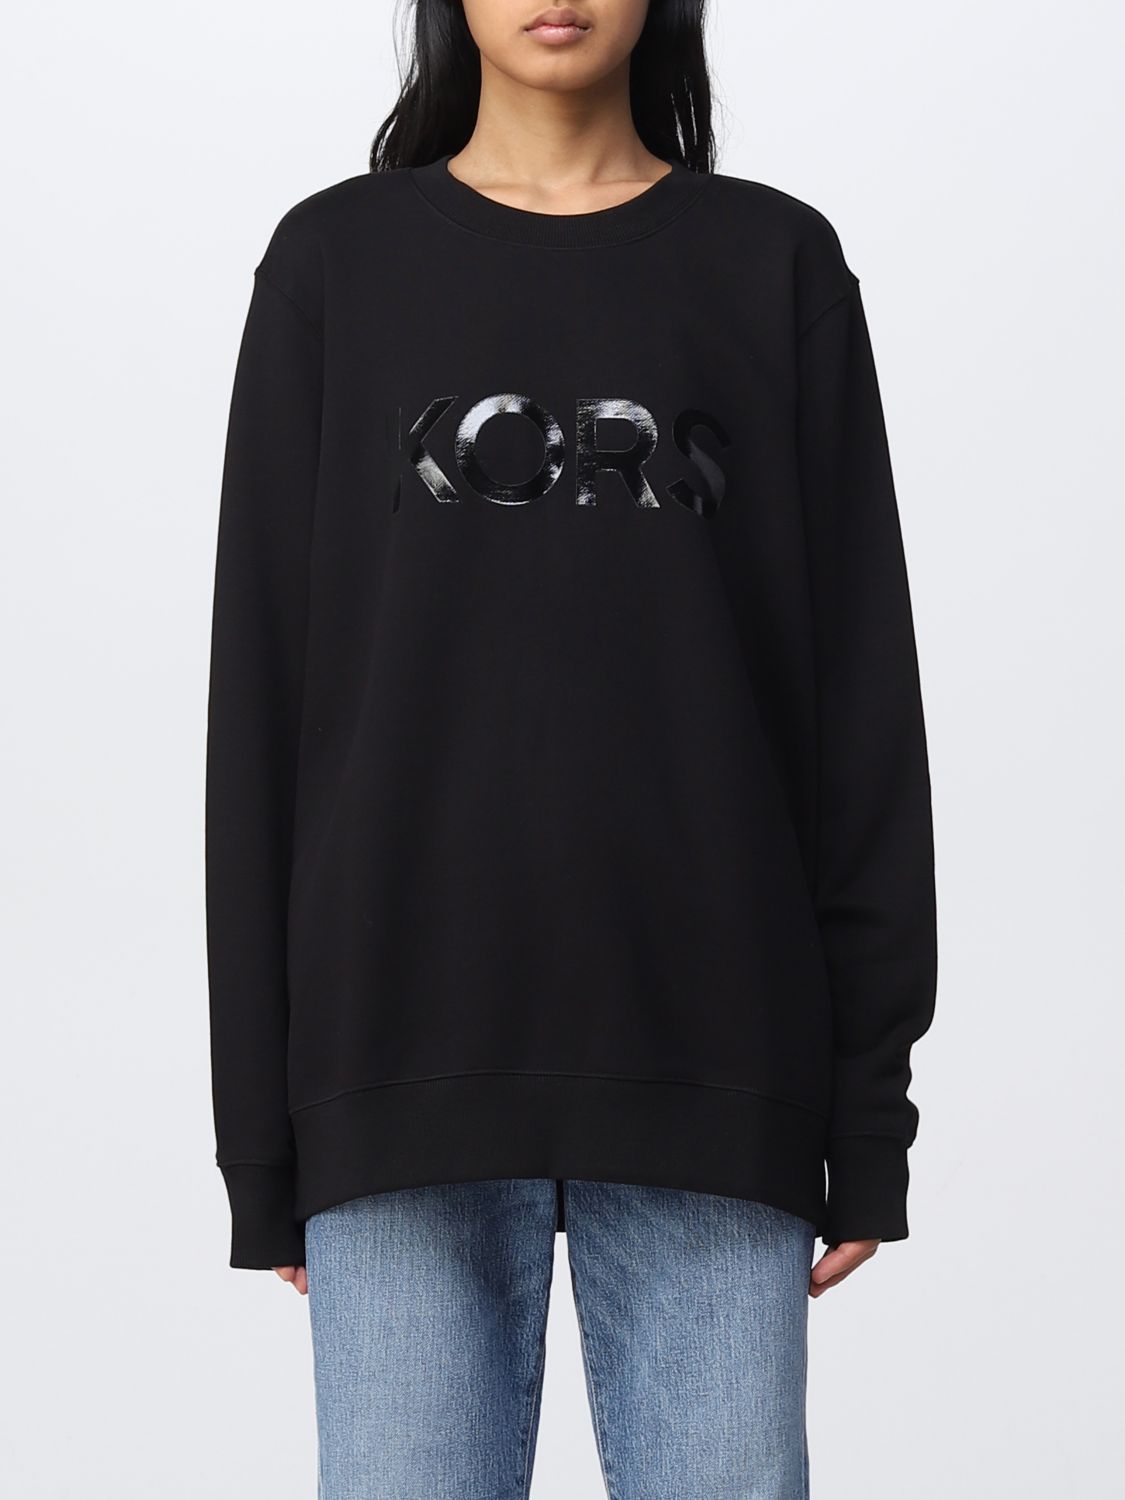 MICHAEL KORS: sweatshirt for woman - Black | Michael Kors sweatshirt  MU250QN4MY online on 